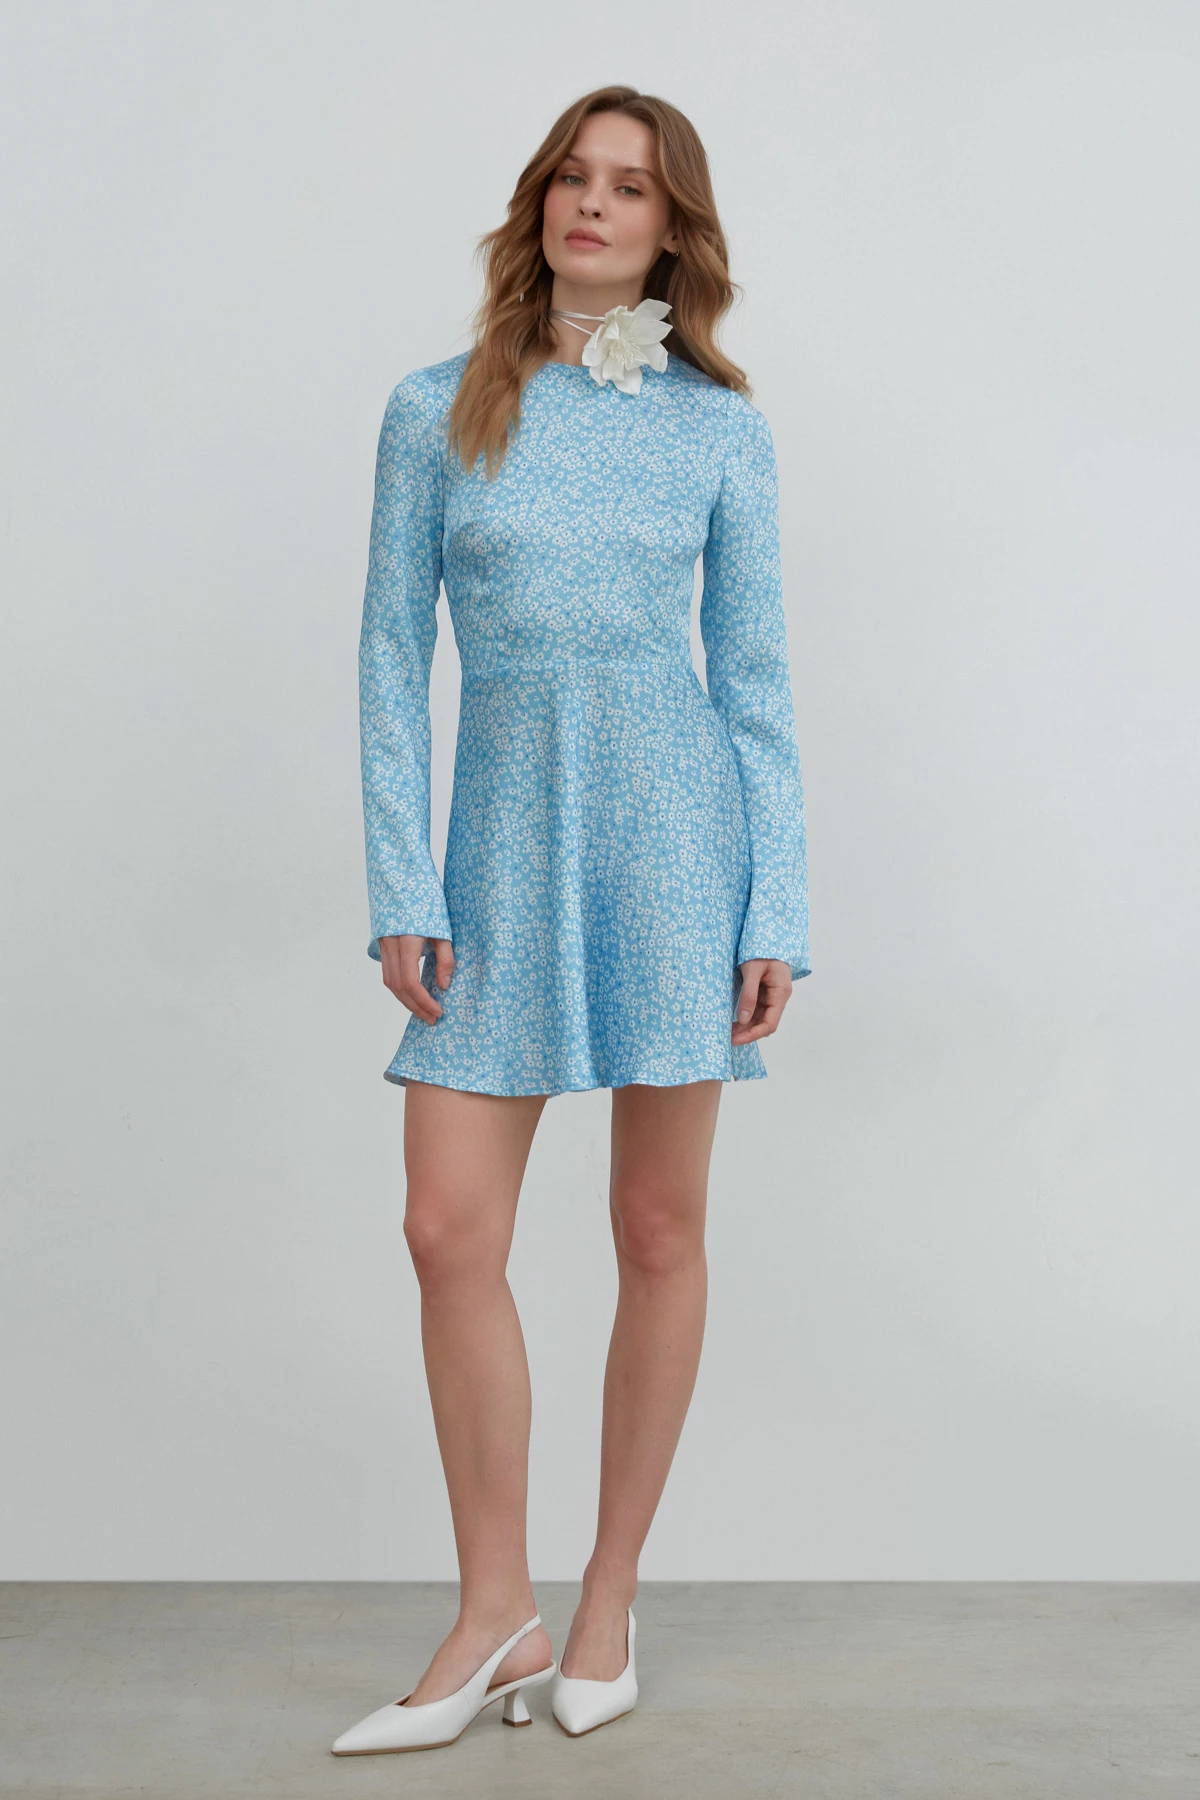 Short blue satin dress in "milky flowers" print, photo 4